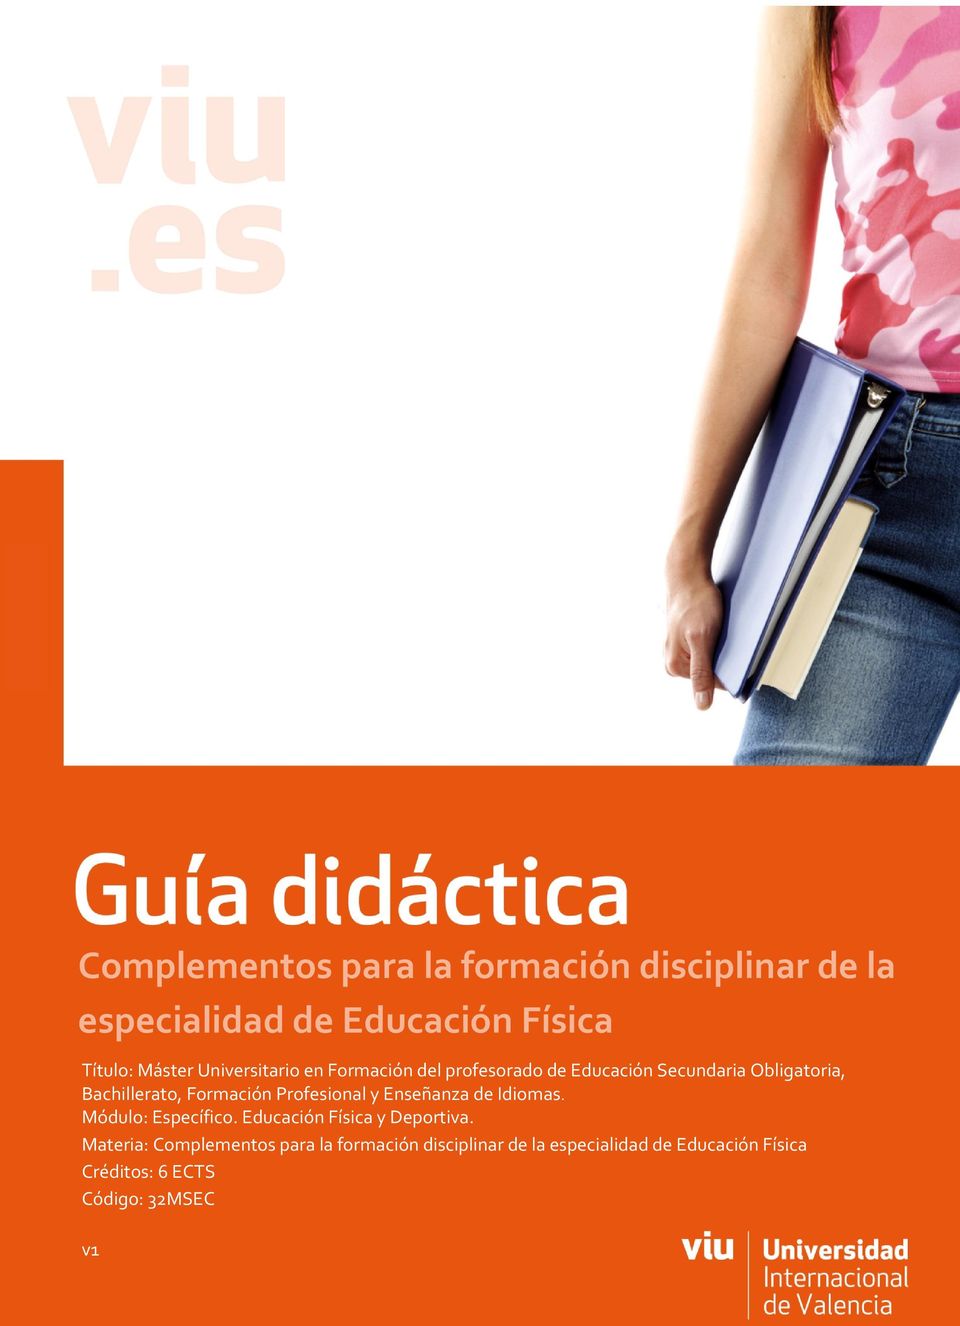 Obligatoria, Bachillerato, Formación Profesional y Enseñanza de Idiomas.